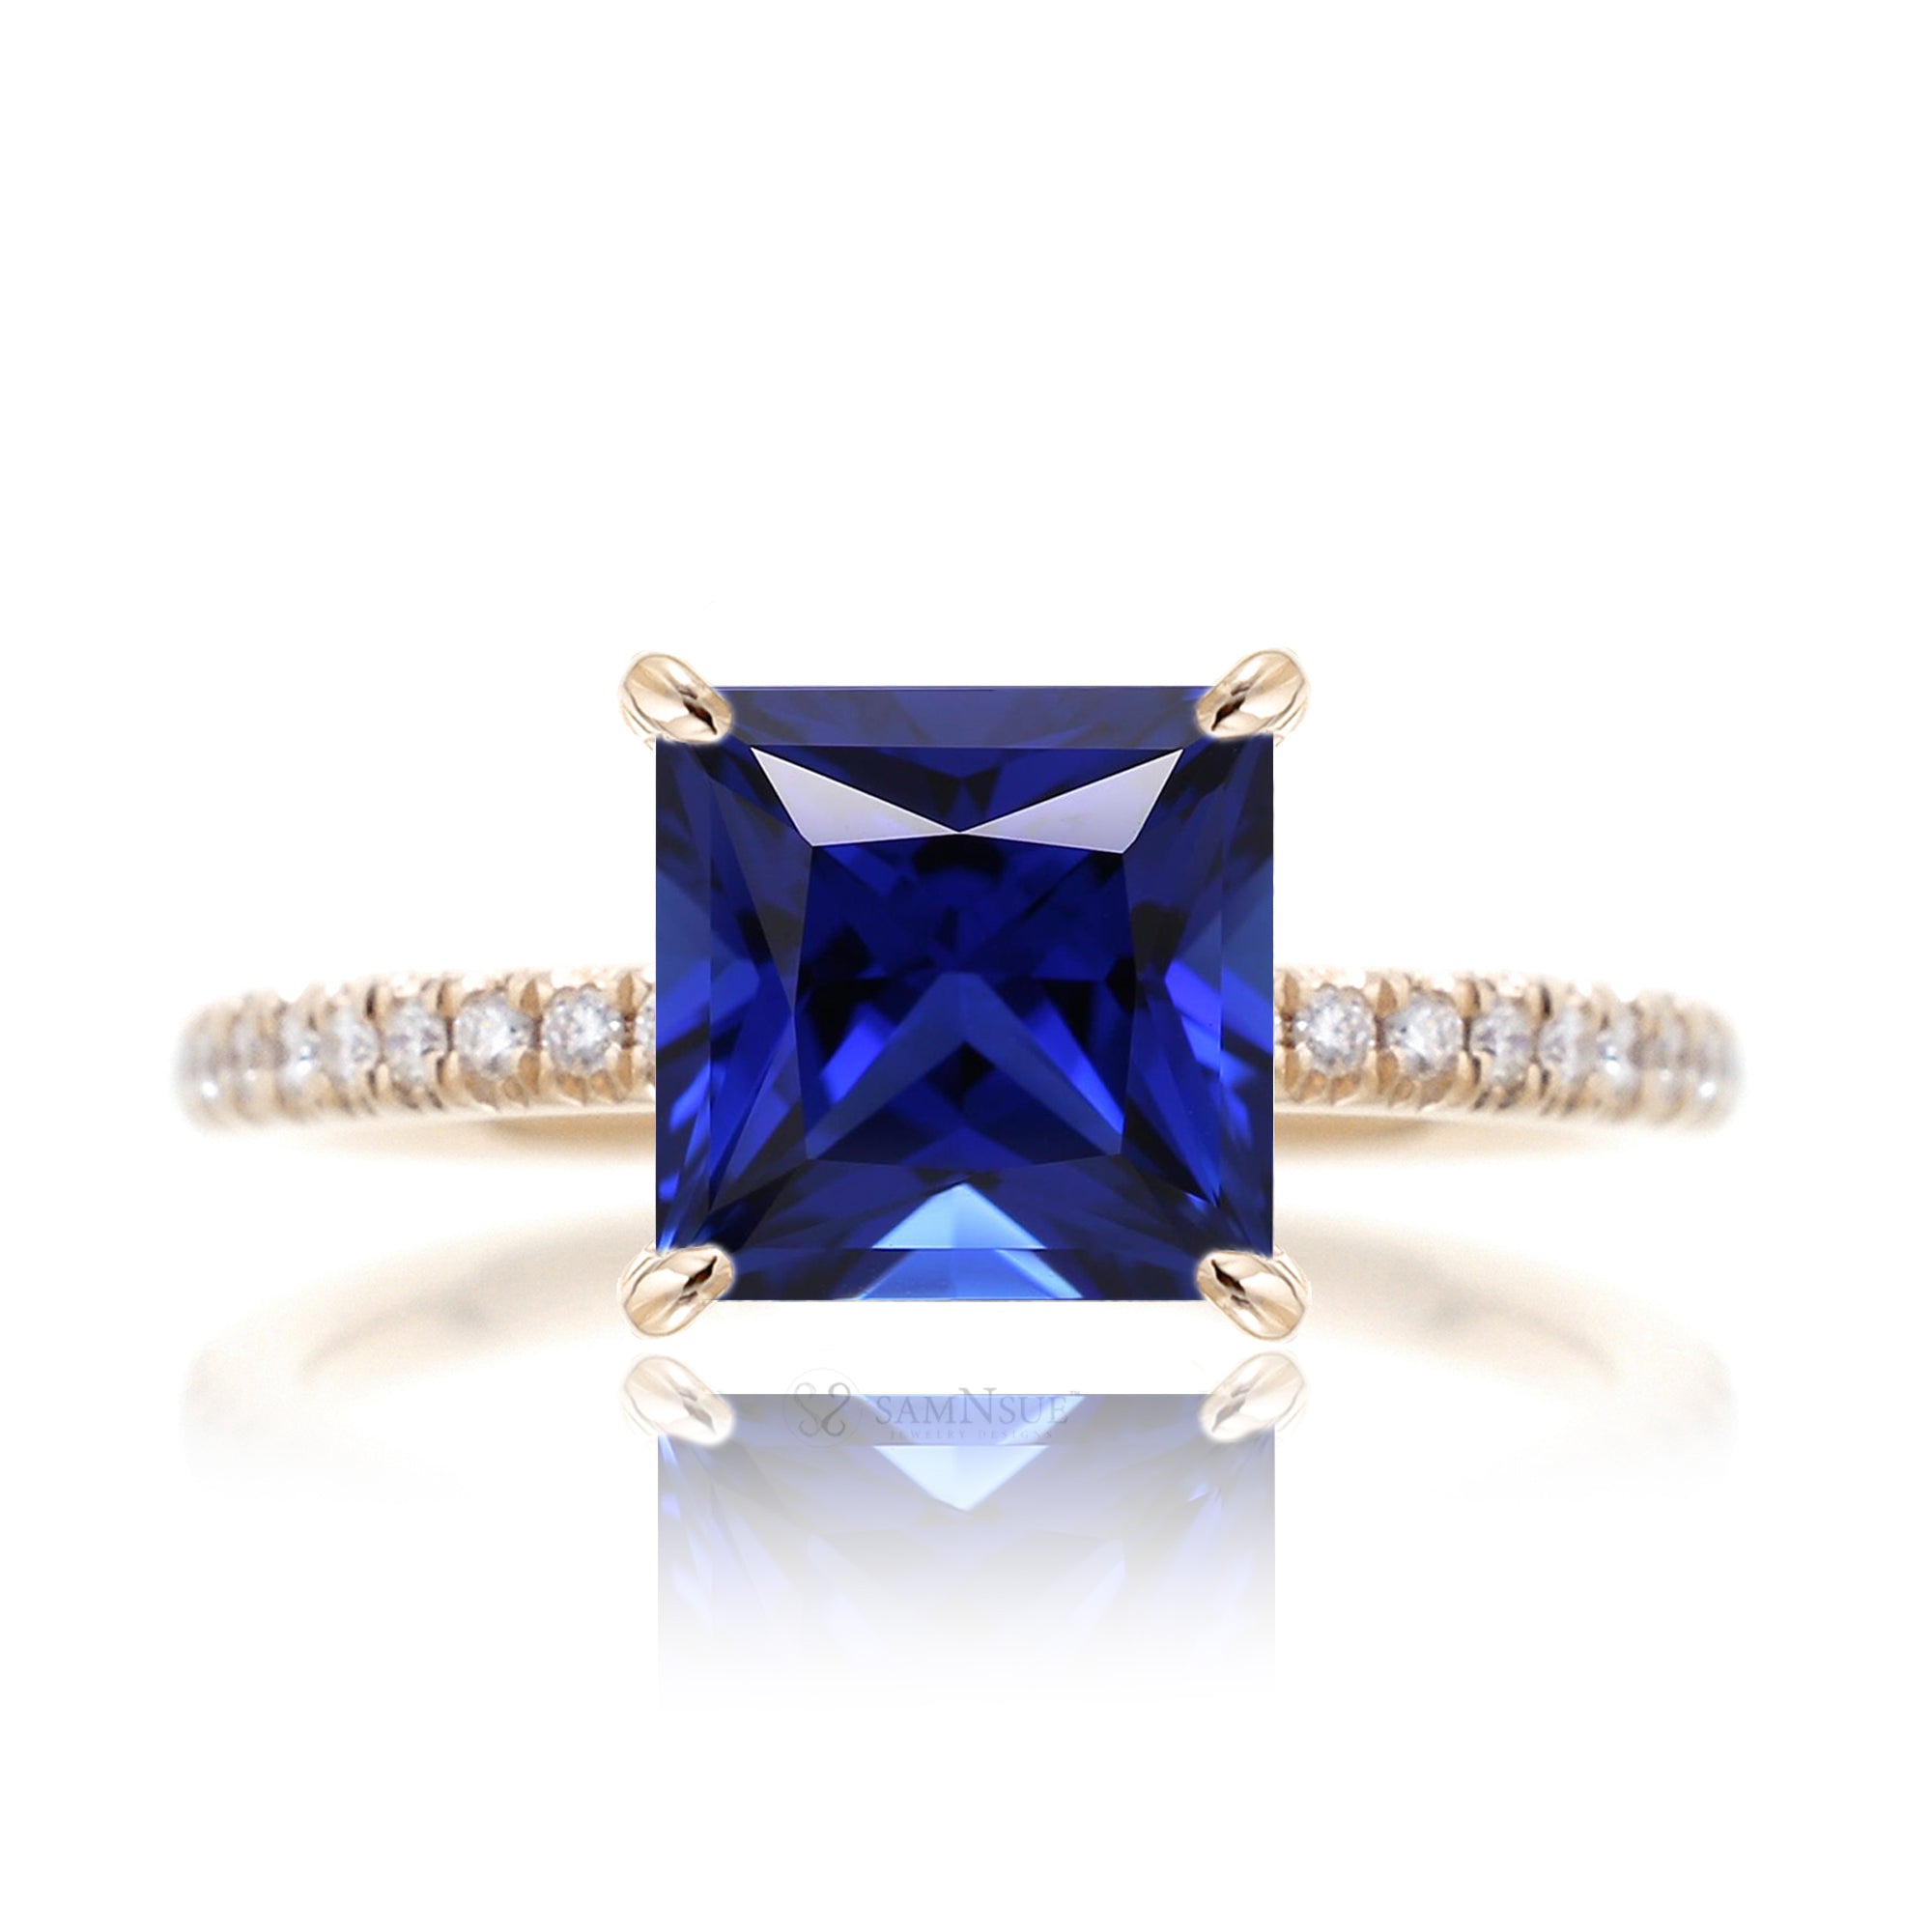 Princess cut blue sapphire diamond engagement ring yellow gold - the Ava